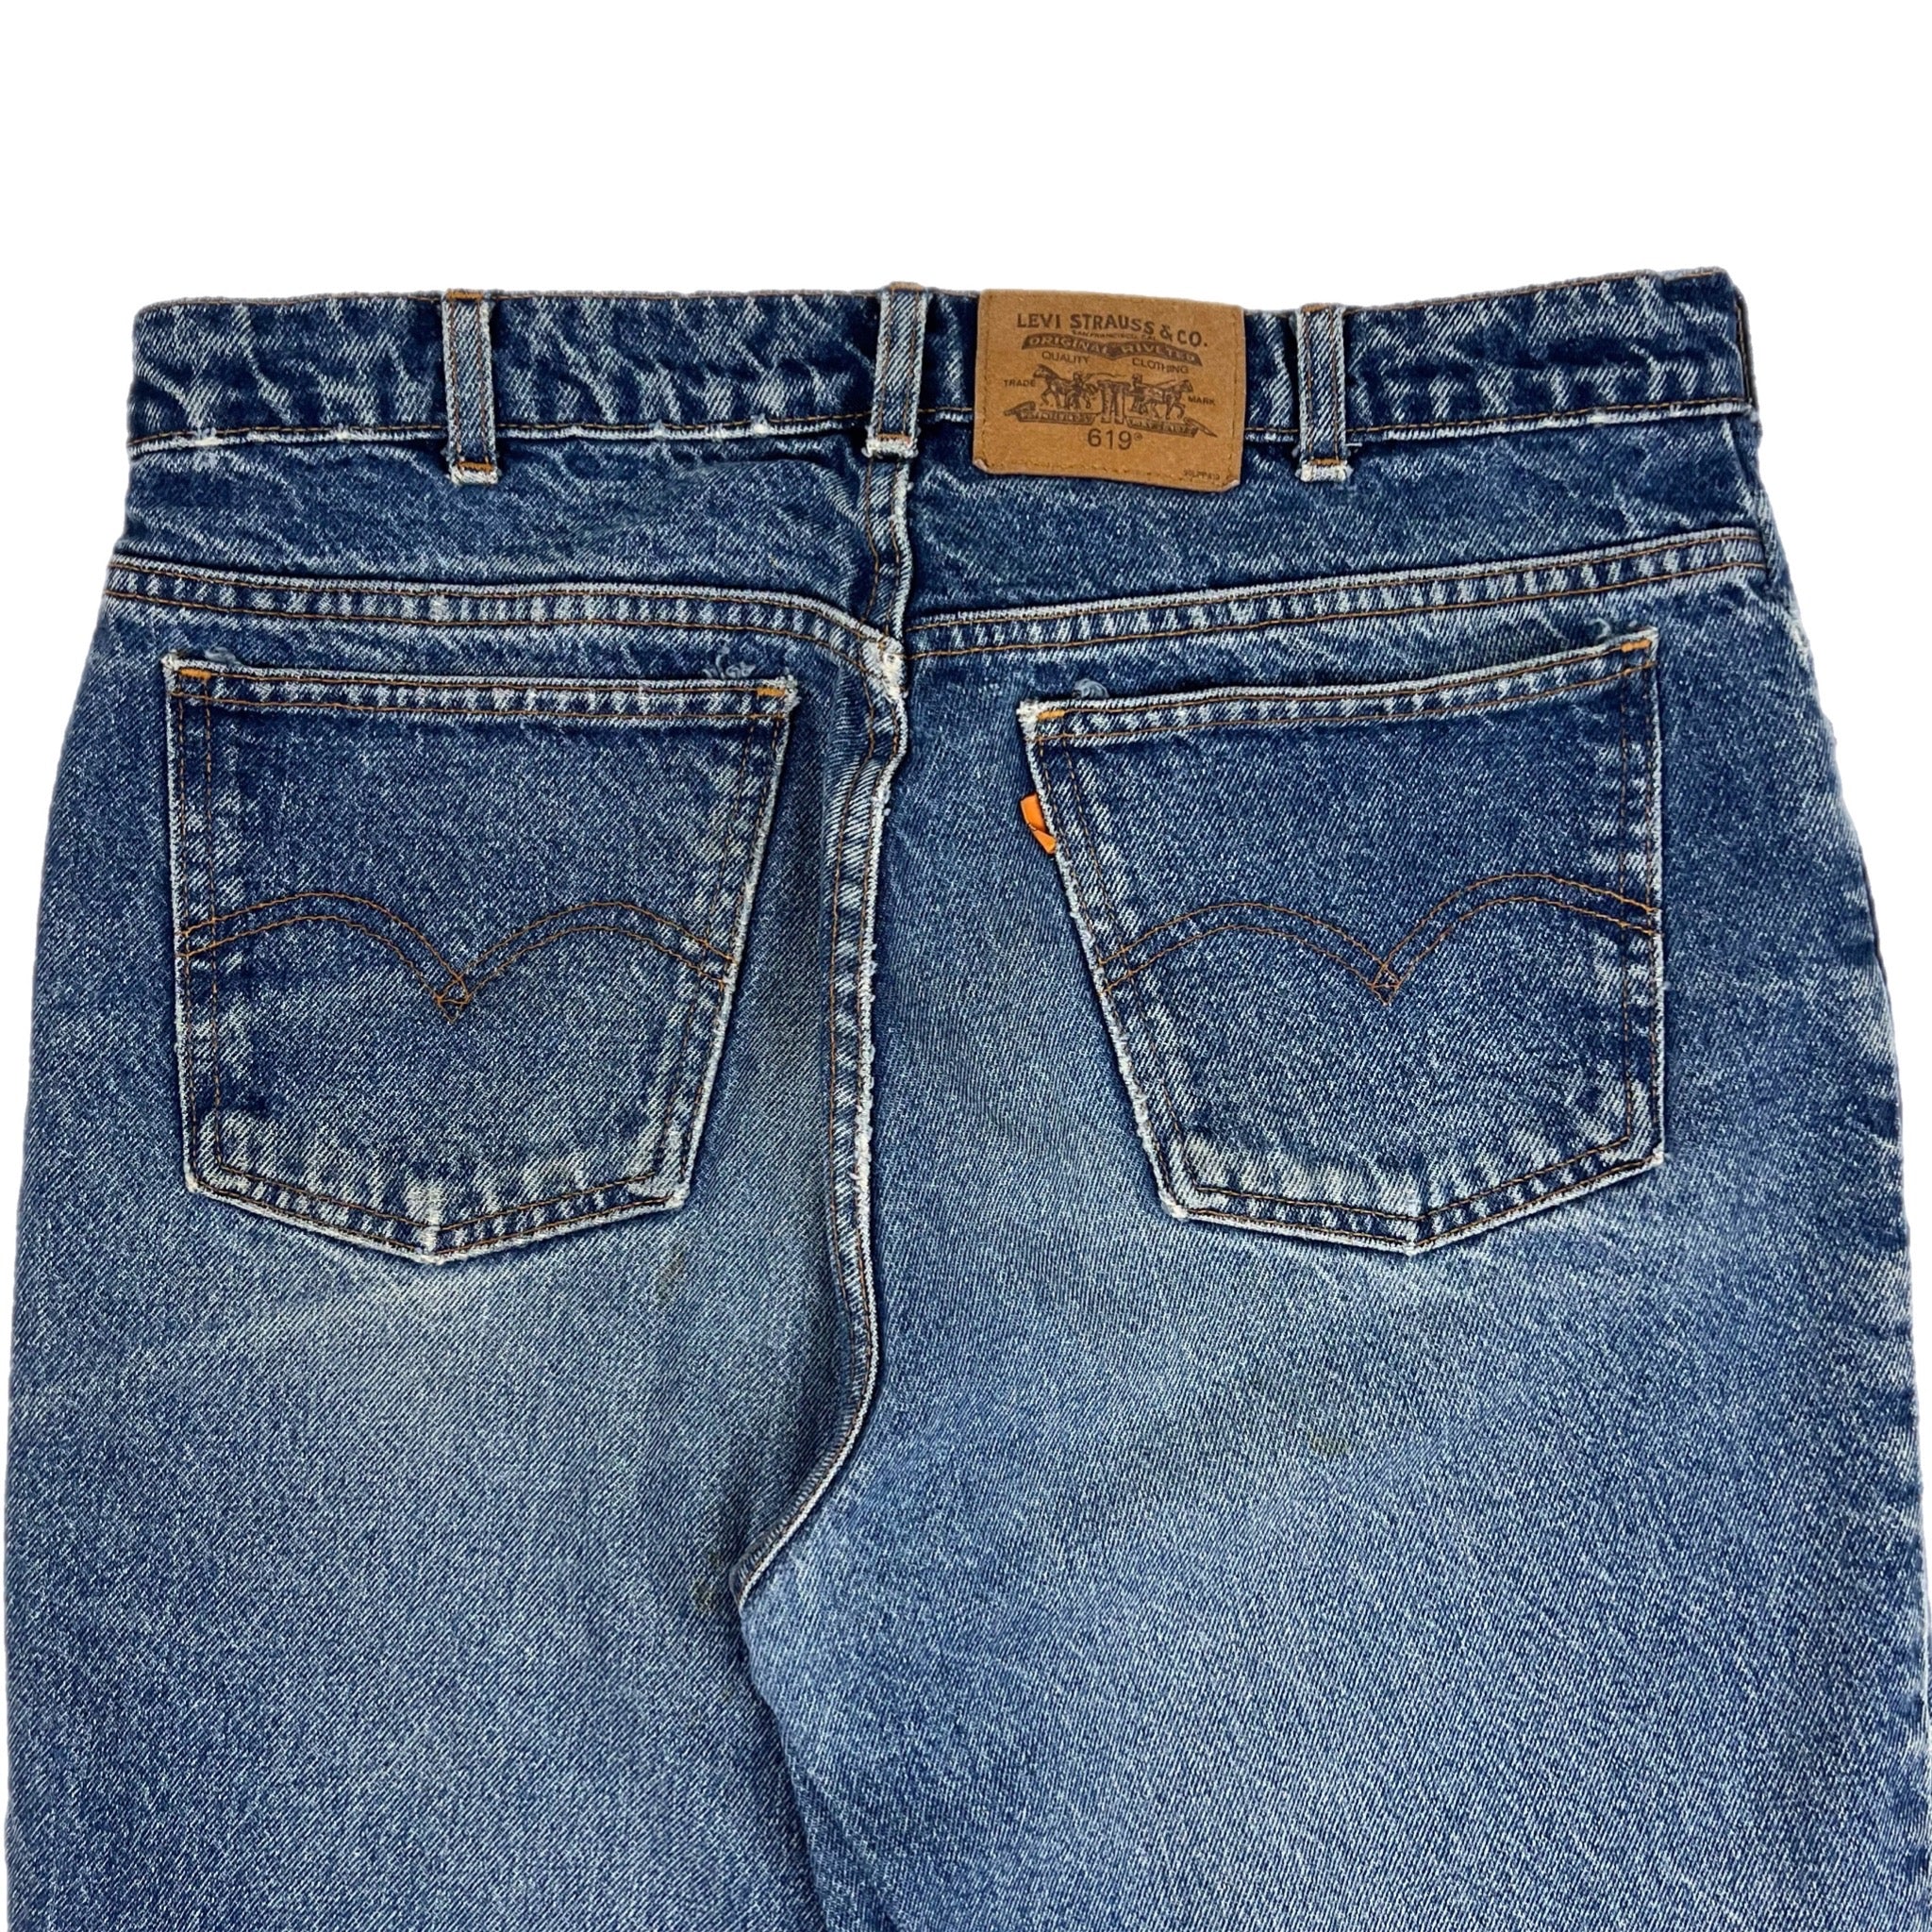 Vintage Levi’s Orange Tab Denim - Classic Blue Jeans